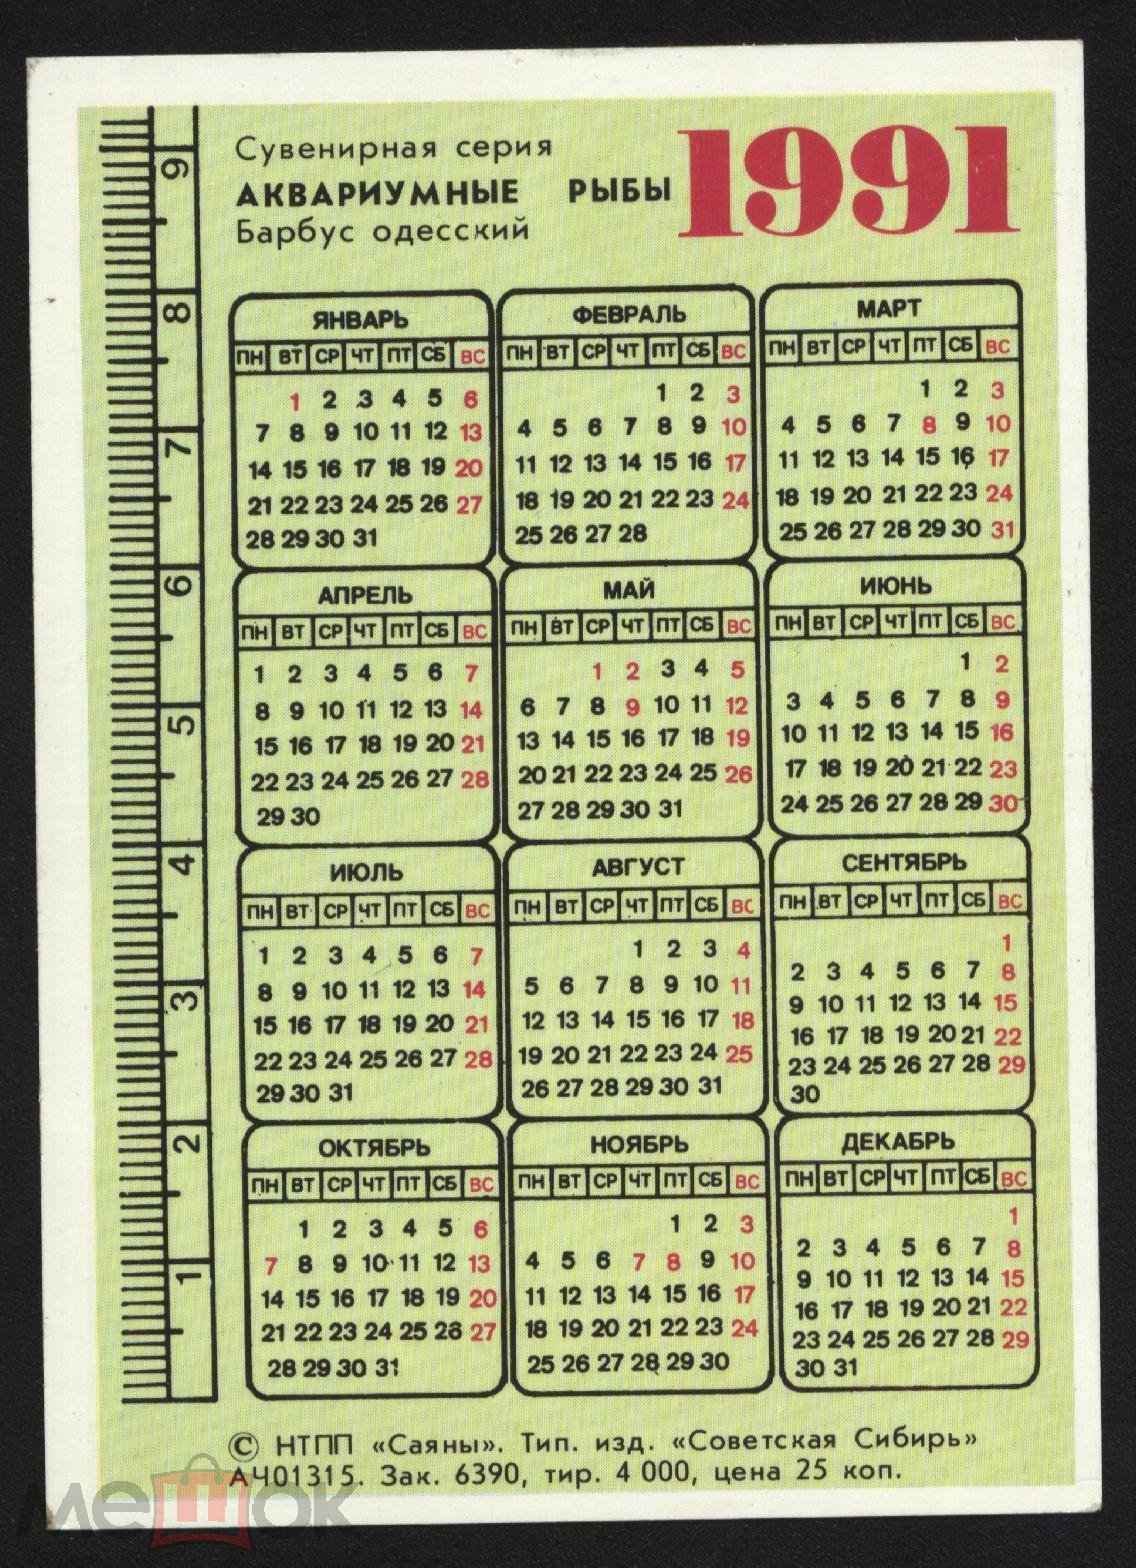 Месяц 1993. Календарь 1991 года. Календарь 91 года. Календарь 1991 года по месяцам. Календарь декабрь 1991 года.